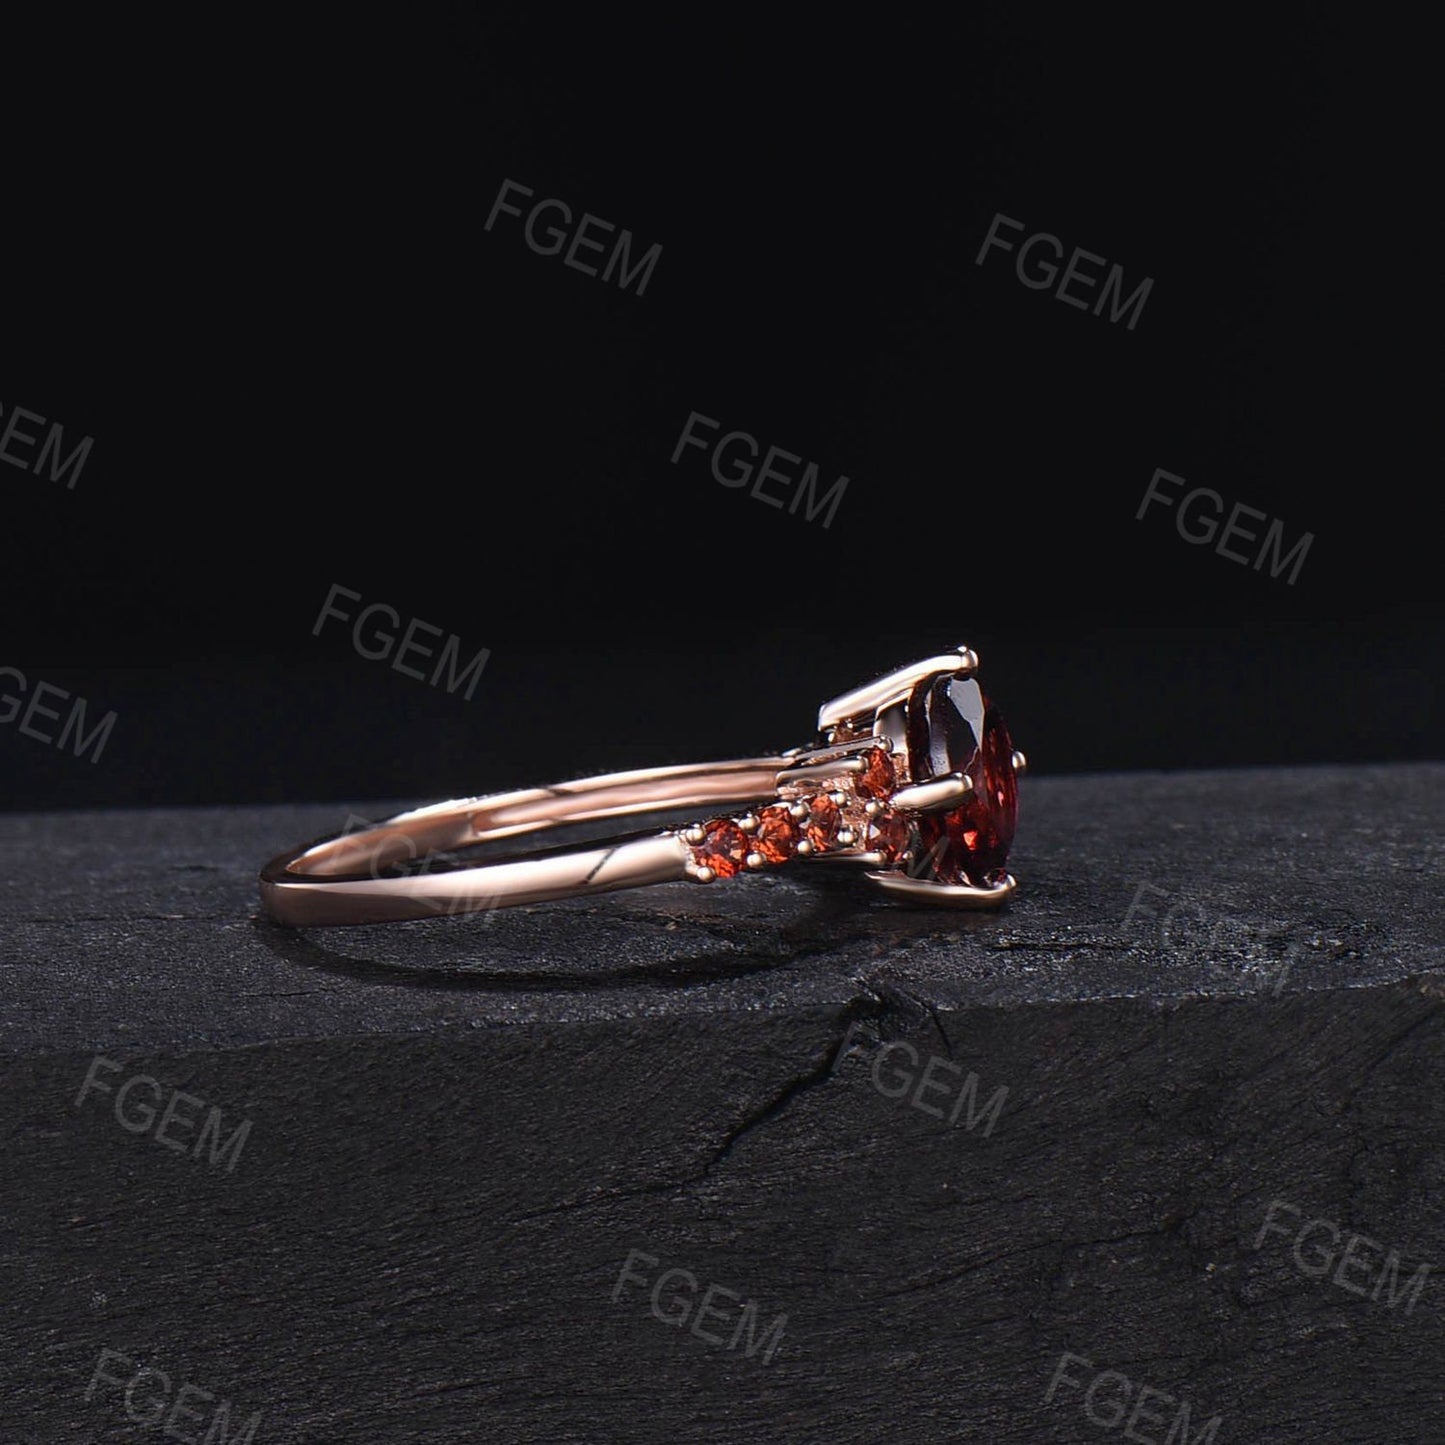 Oval/Pear/Hexagon Half Eternity Garnet Engagement Ring January Birthstone Wedding Ring Natural Red Garnet Jewelry Birthday/Anniversary Gift